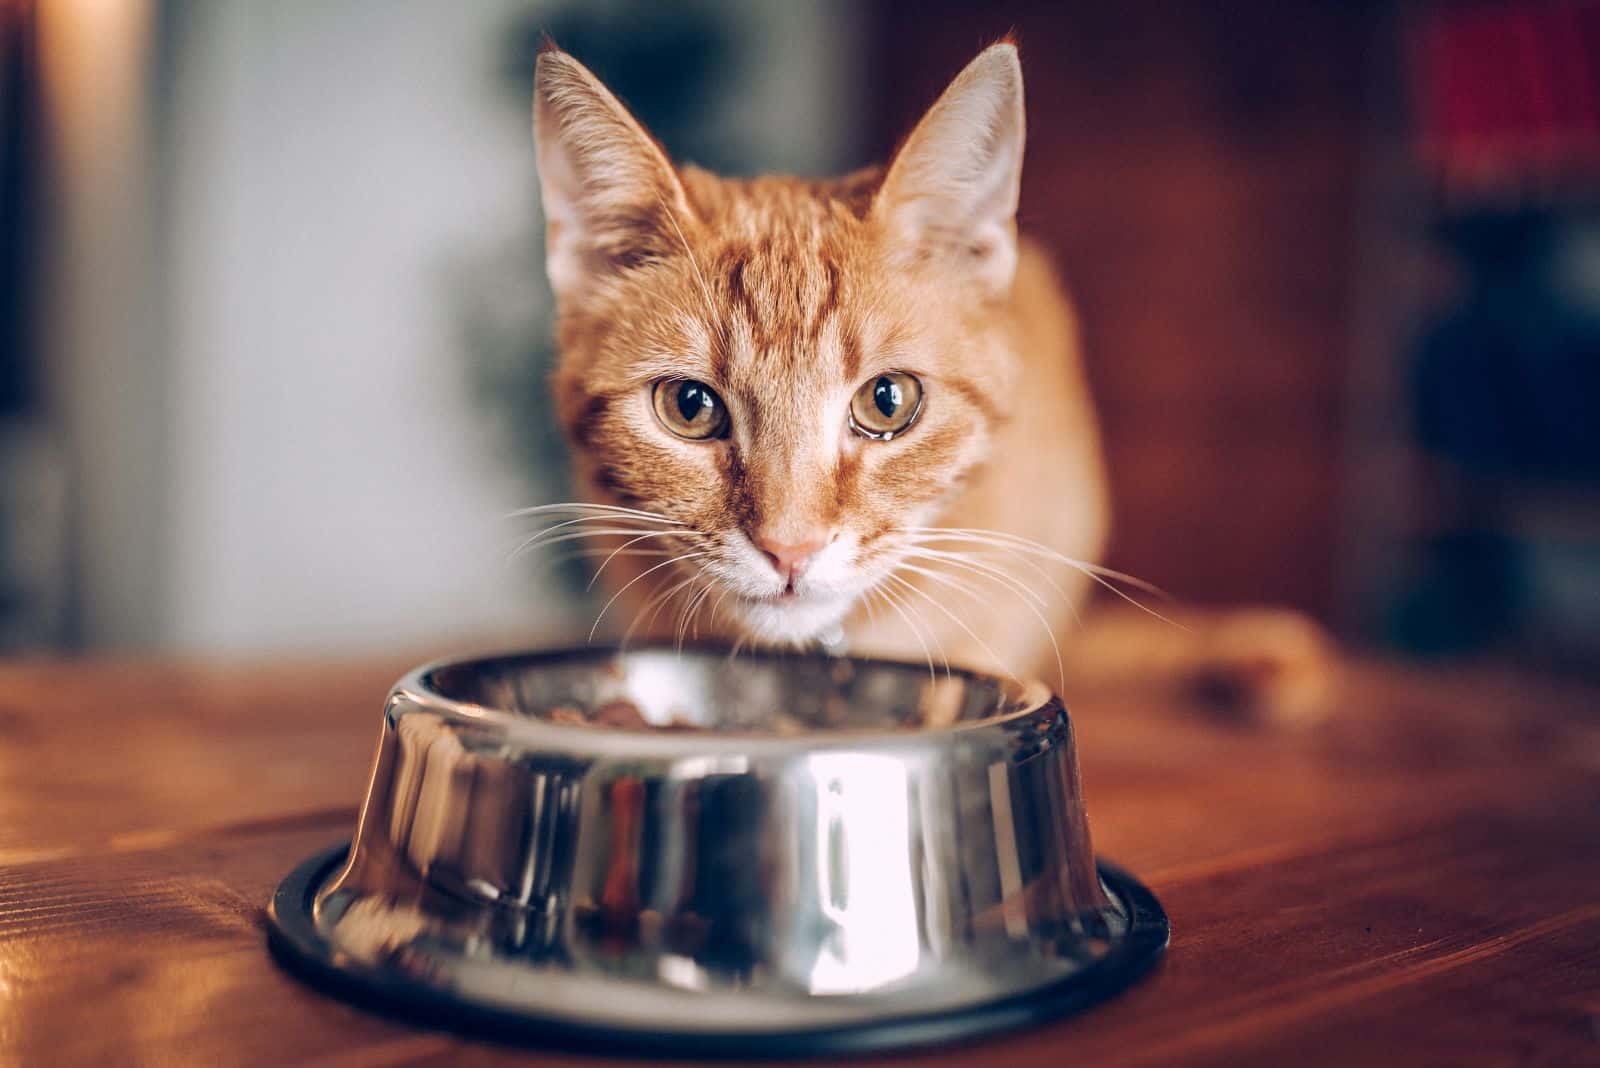 cat eating from metallic dish